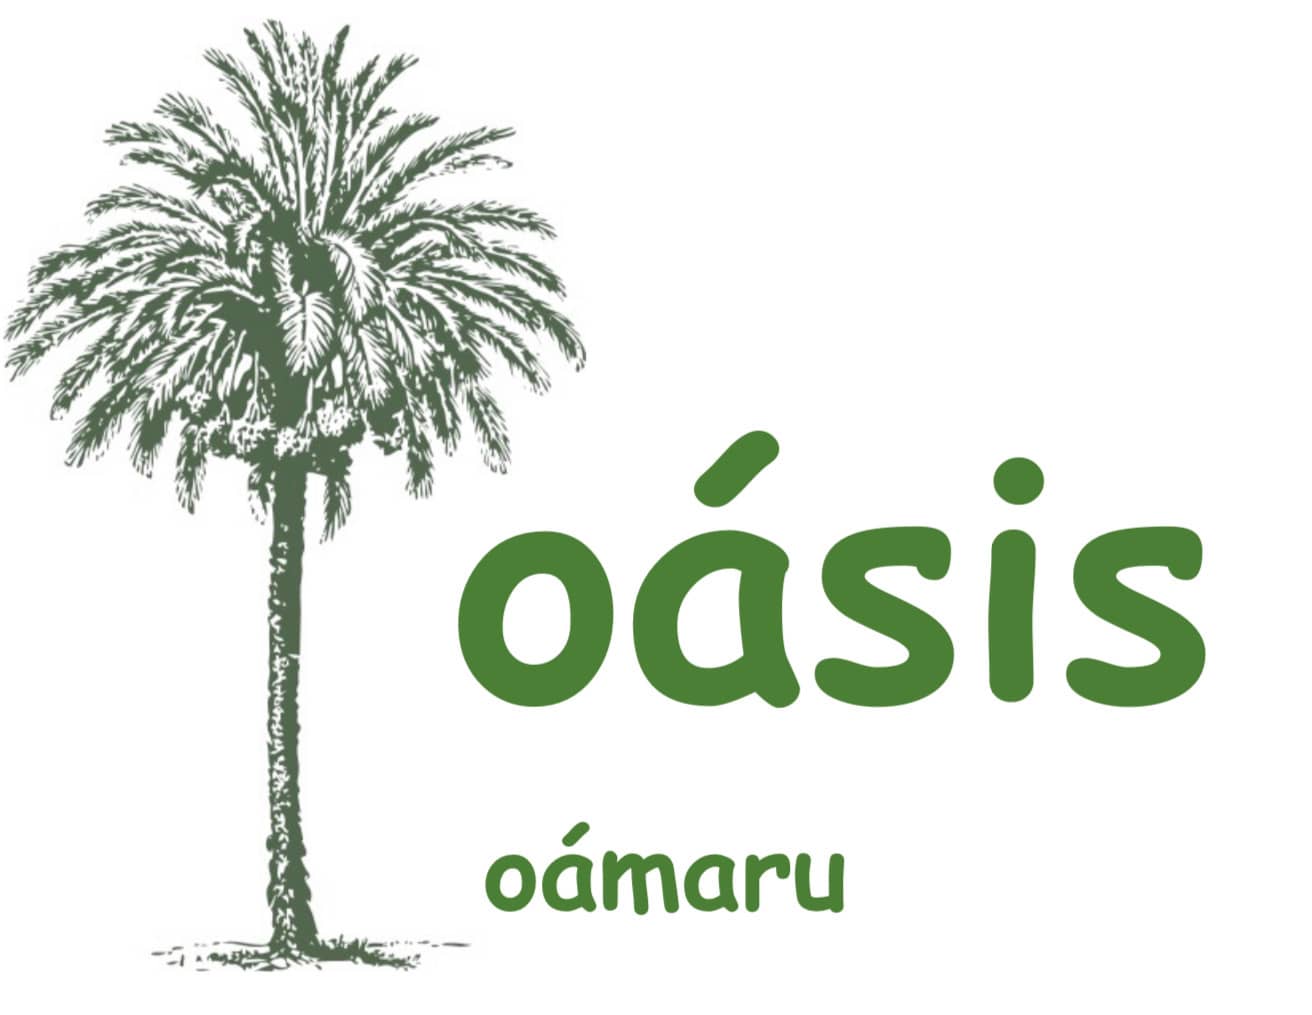 Oasis Oamaru